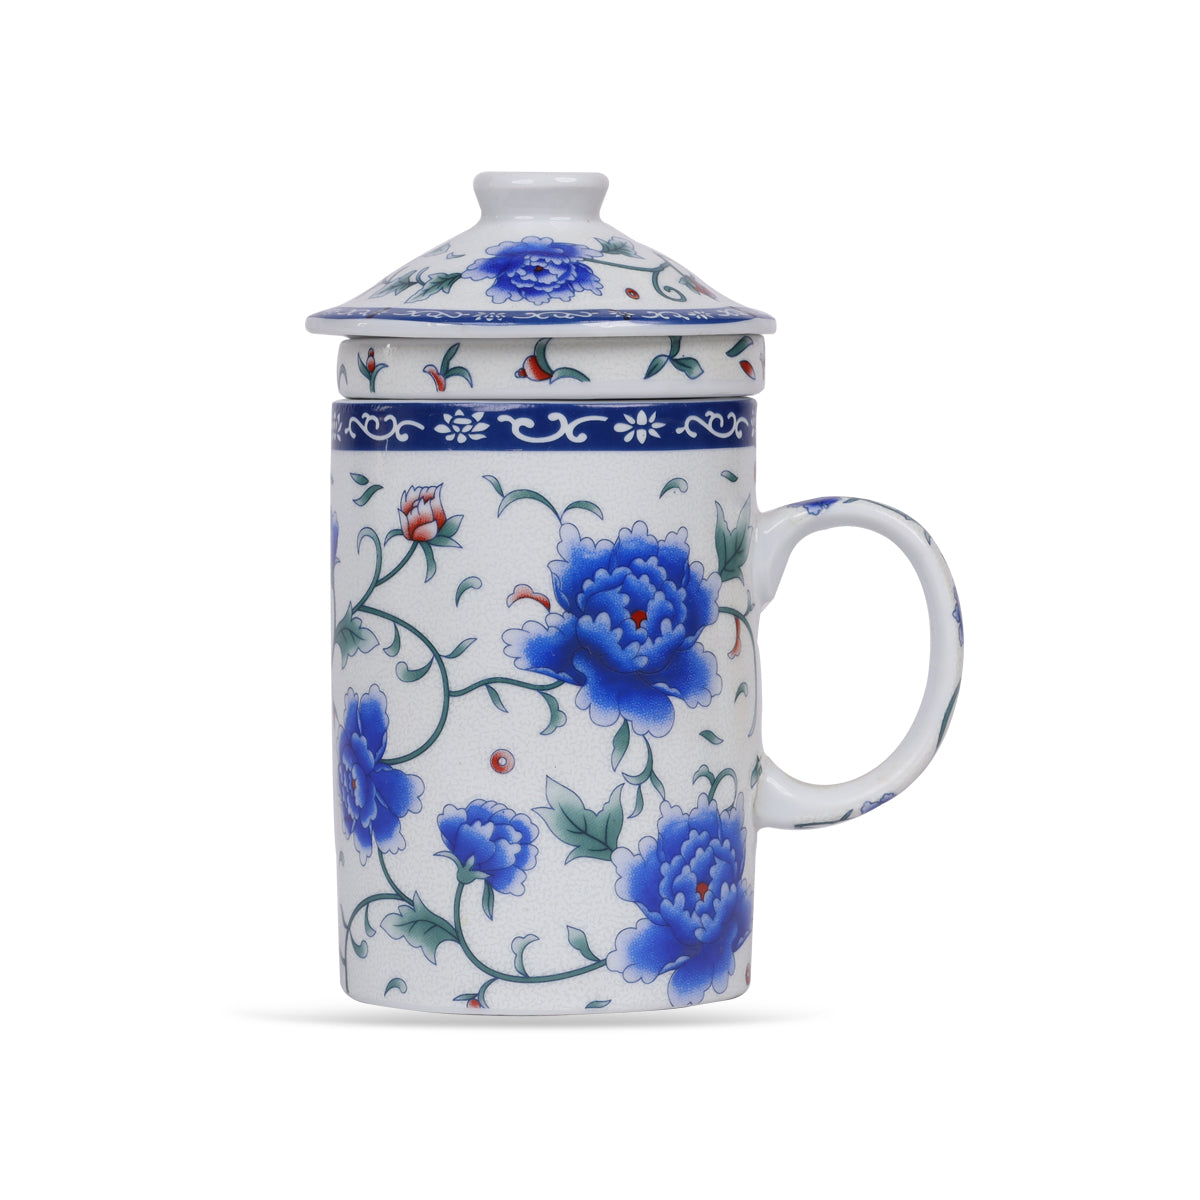 Ornate Tea Infuser Mug Blue Flower with Strainer and Lid